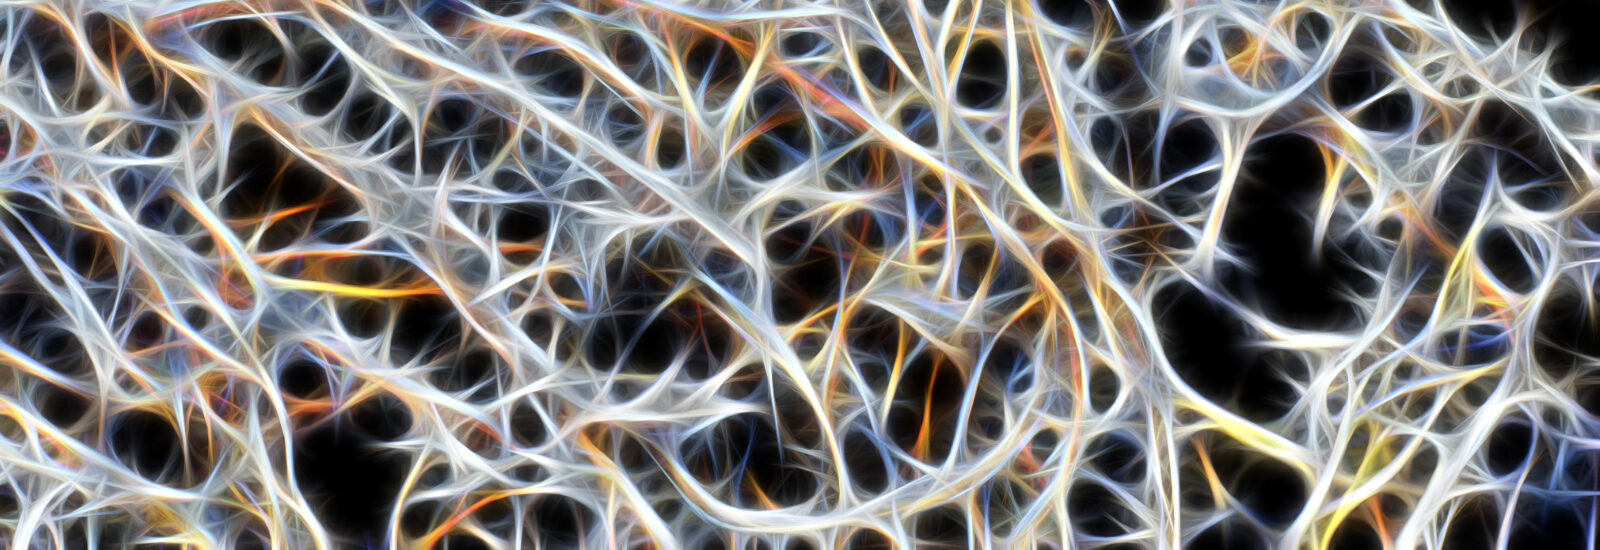 Image representing brain neural activity